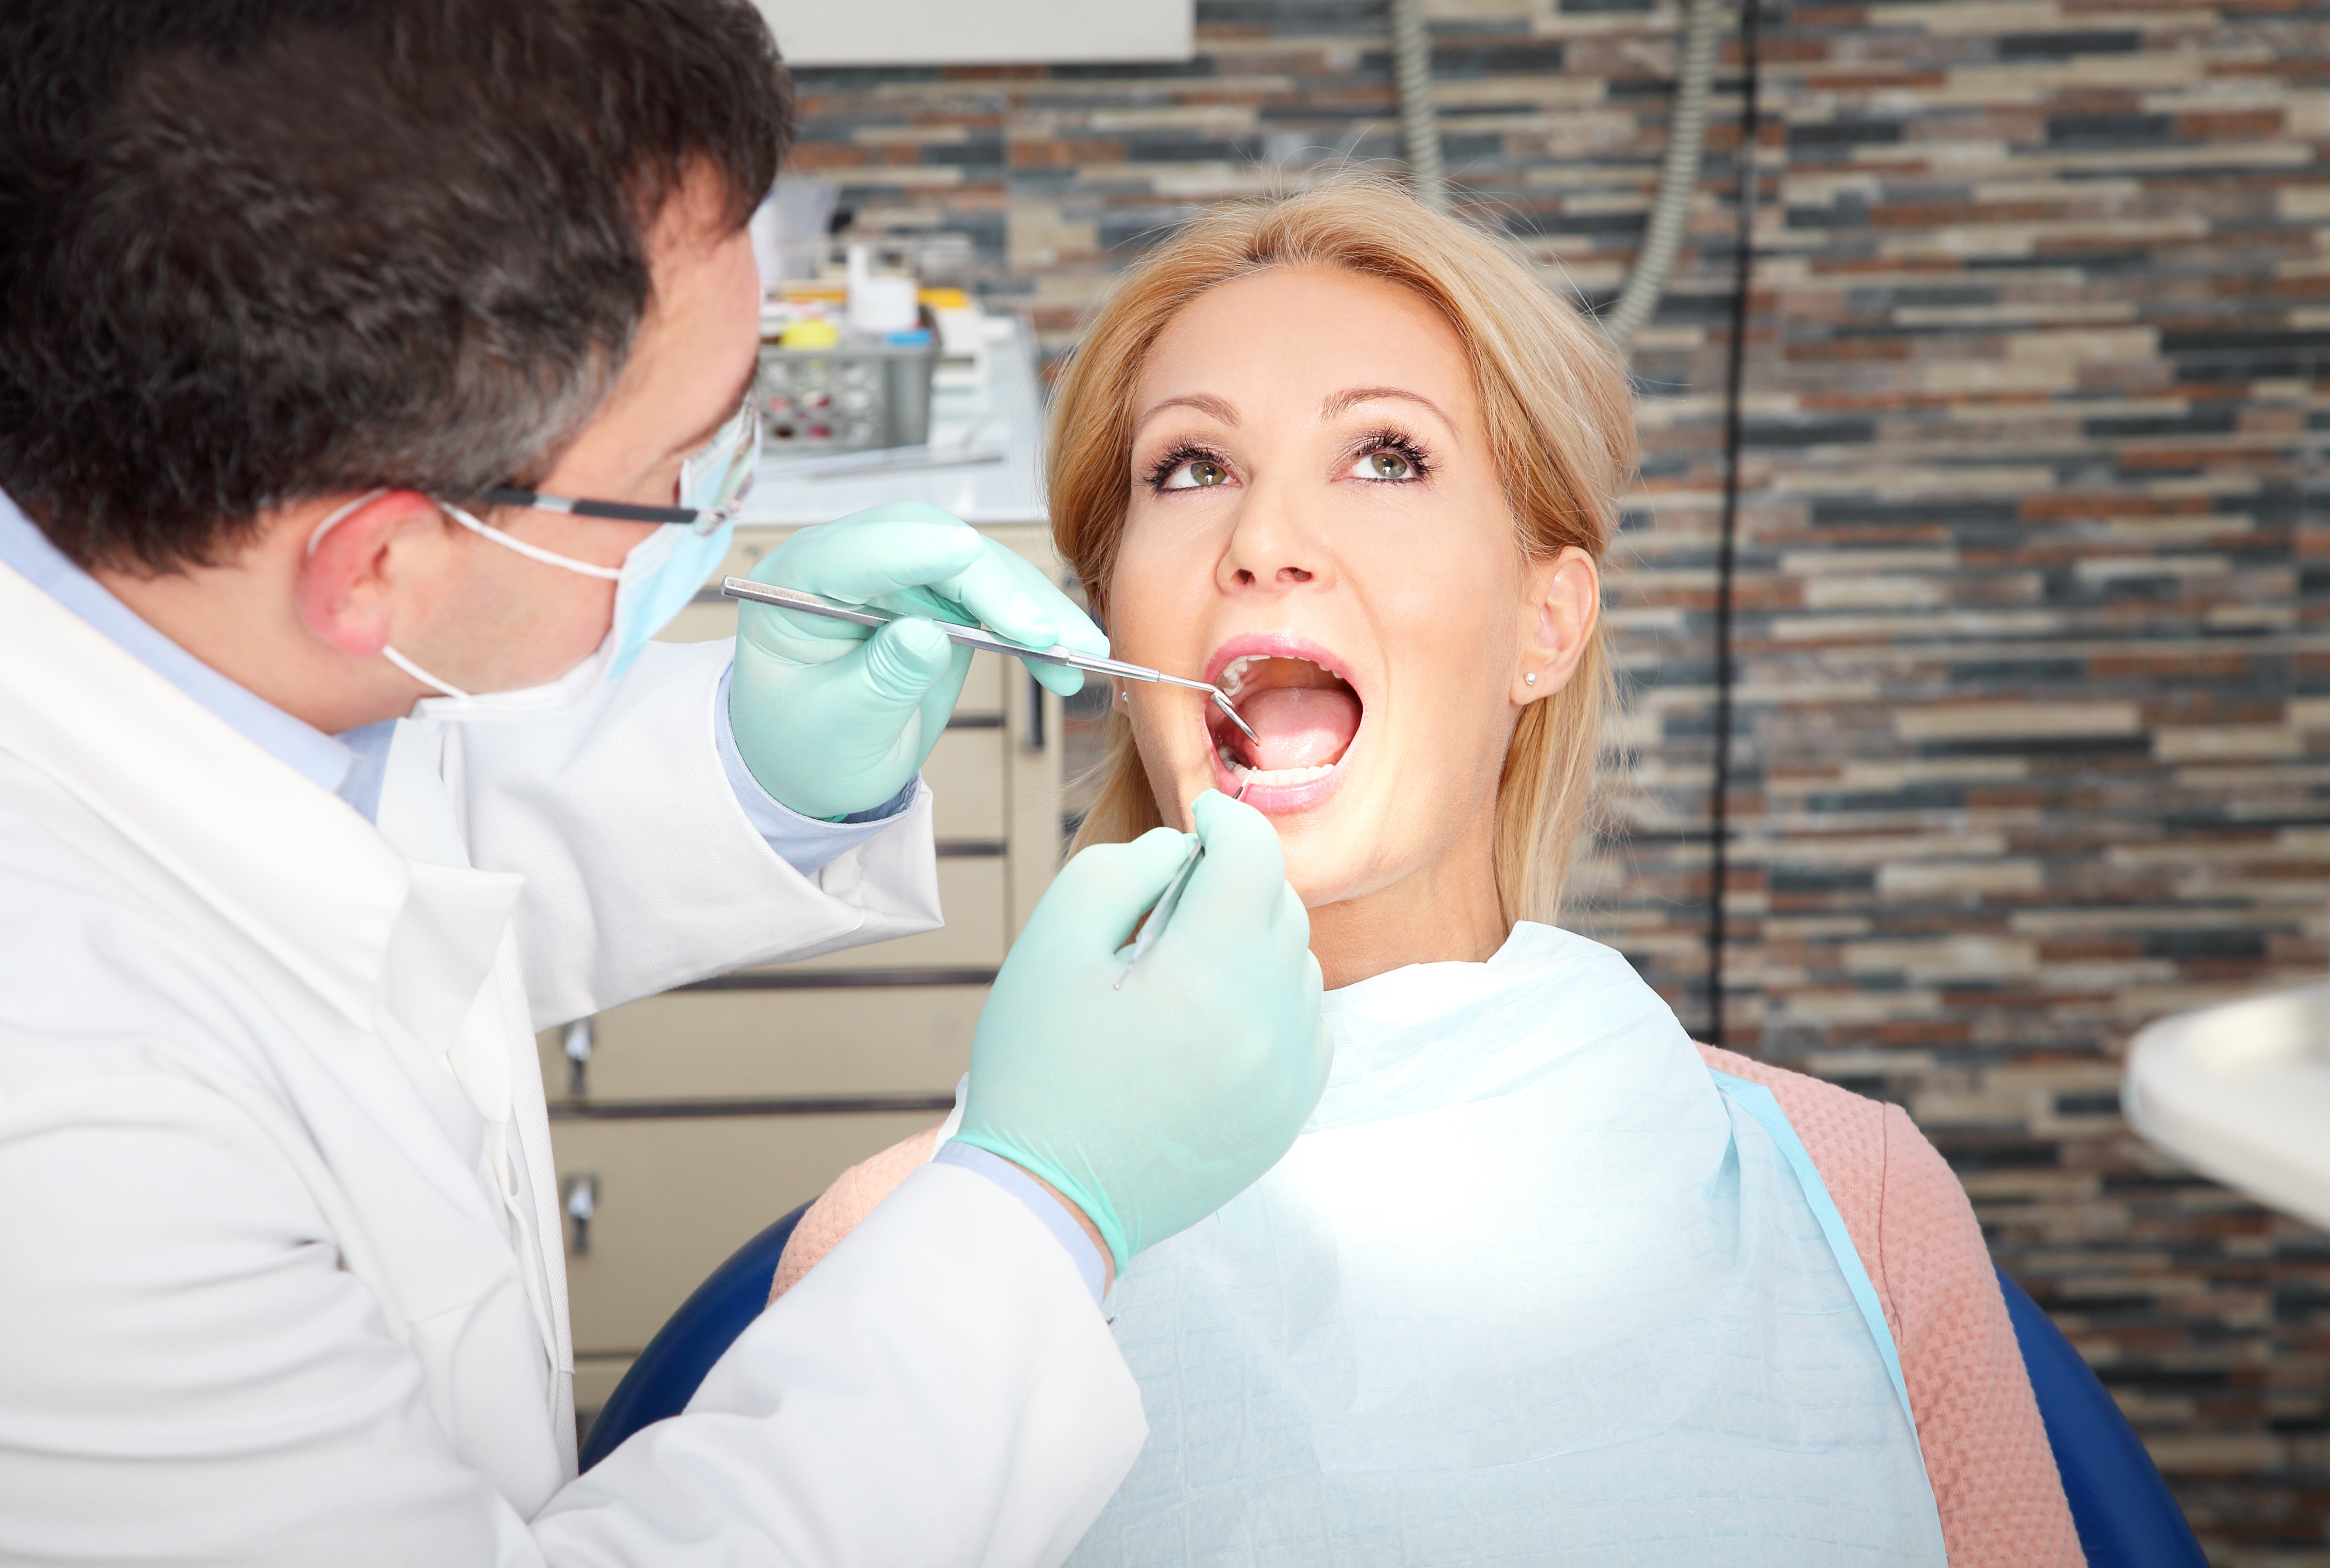 Посещение врача стоматолога. Арт Дент Фрязино стоматология. Прием у стоматолога. Стоматолог и пациент. Осмотр стоматолога.